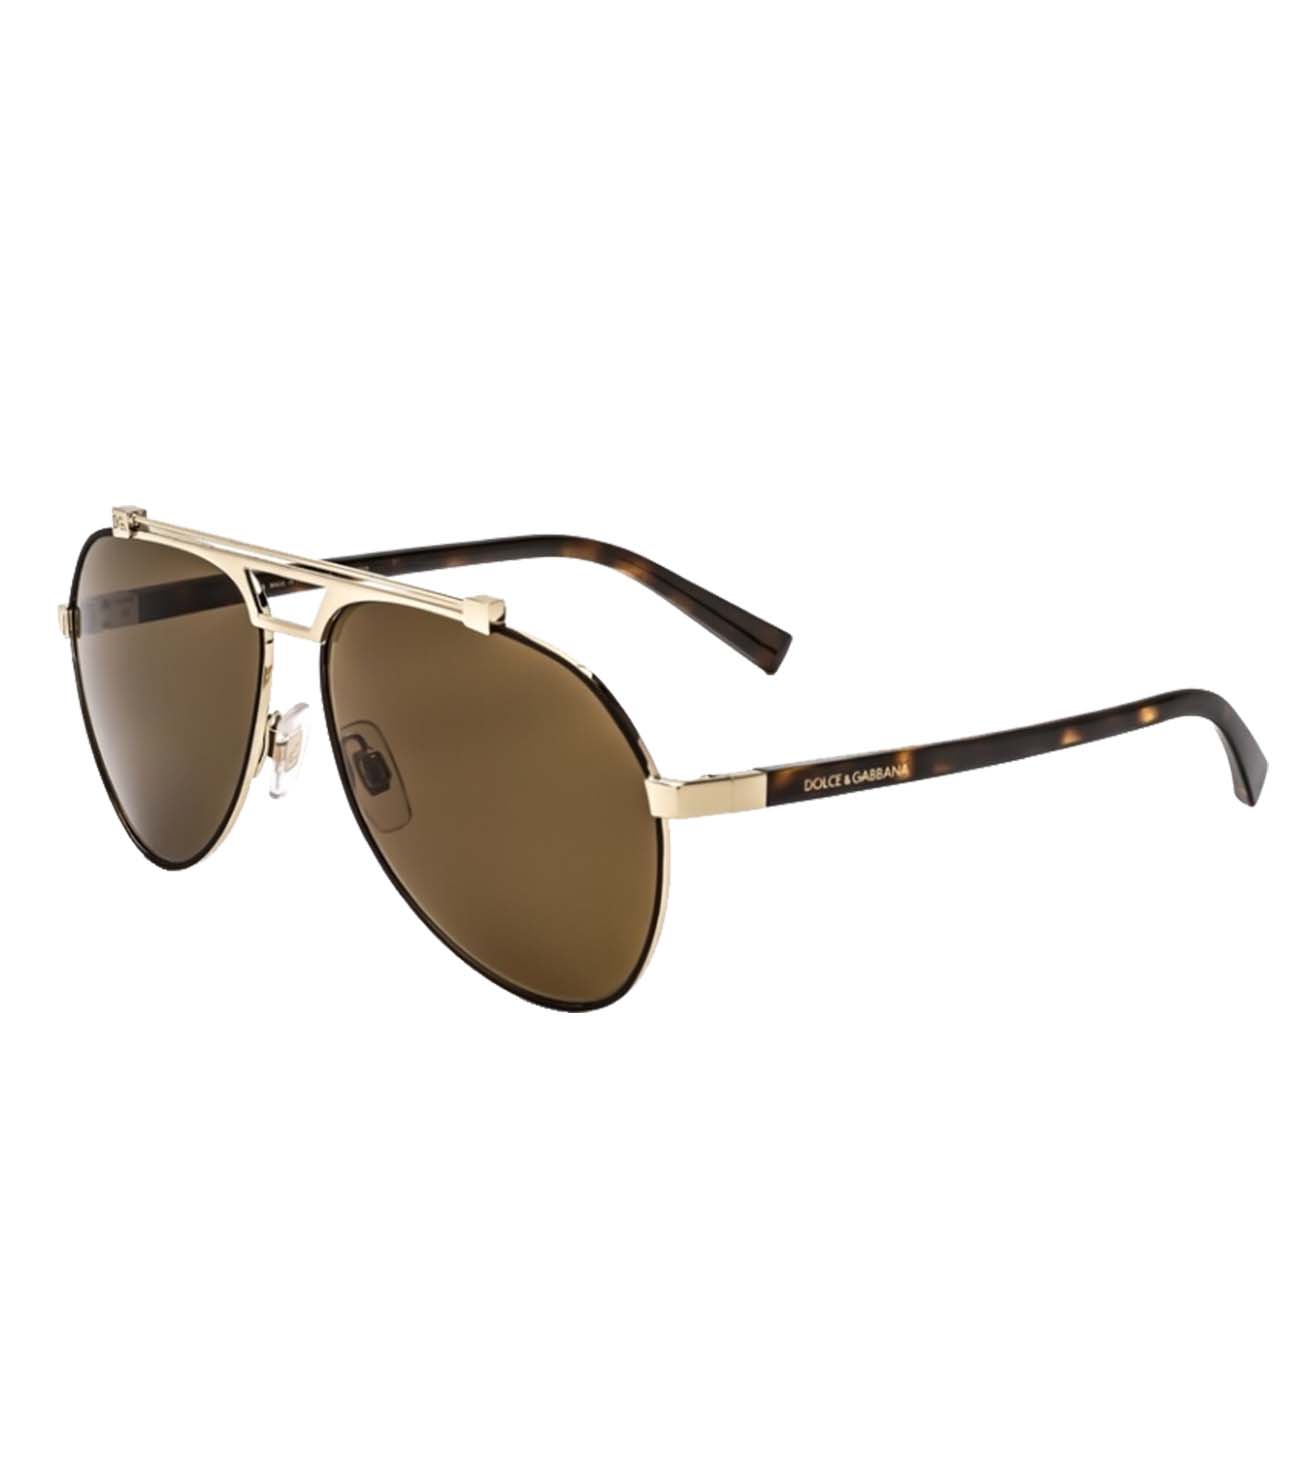 Dolce & Gabbana Men's Brown Aviator Sunglasses